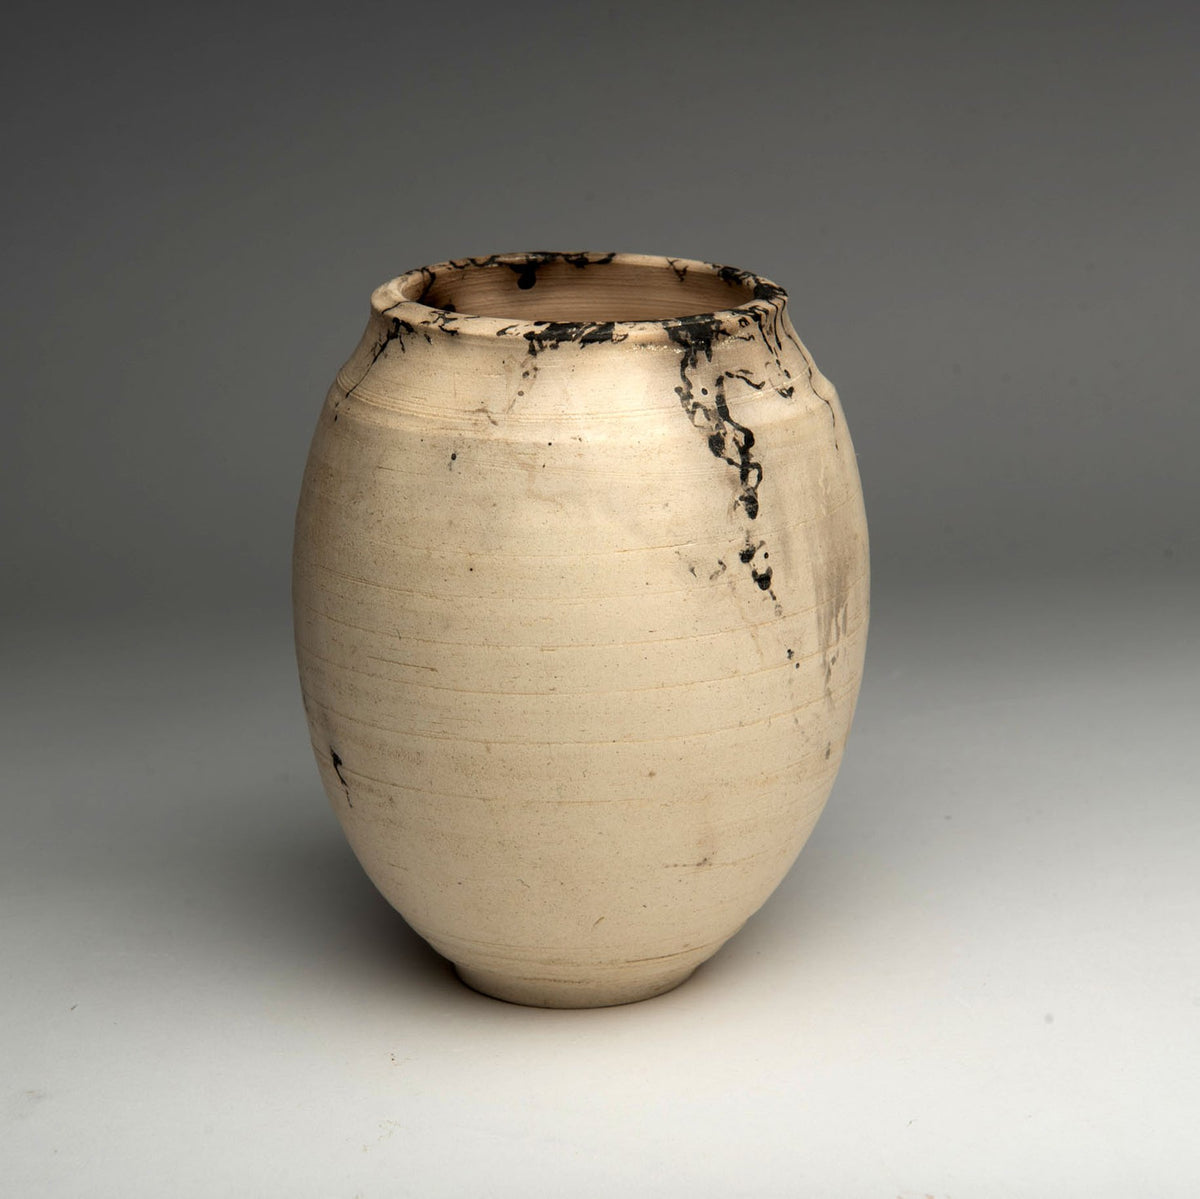 Decorative Raku Vase by Lynda Smith LYNDA45 – The Potter's Studio Inc.